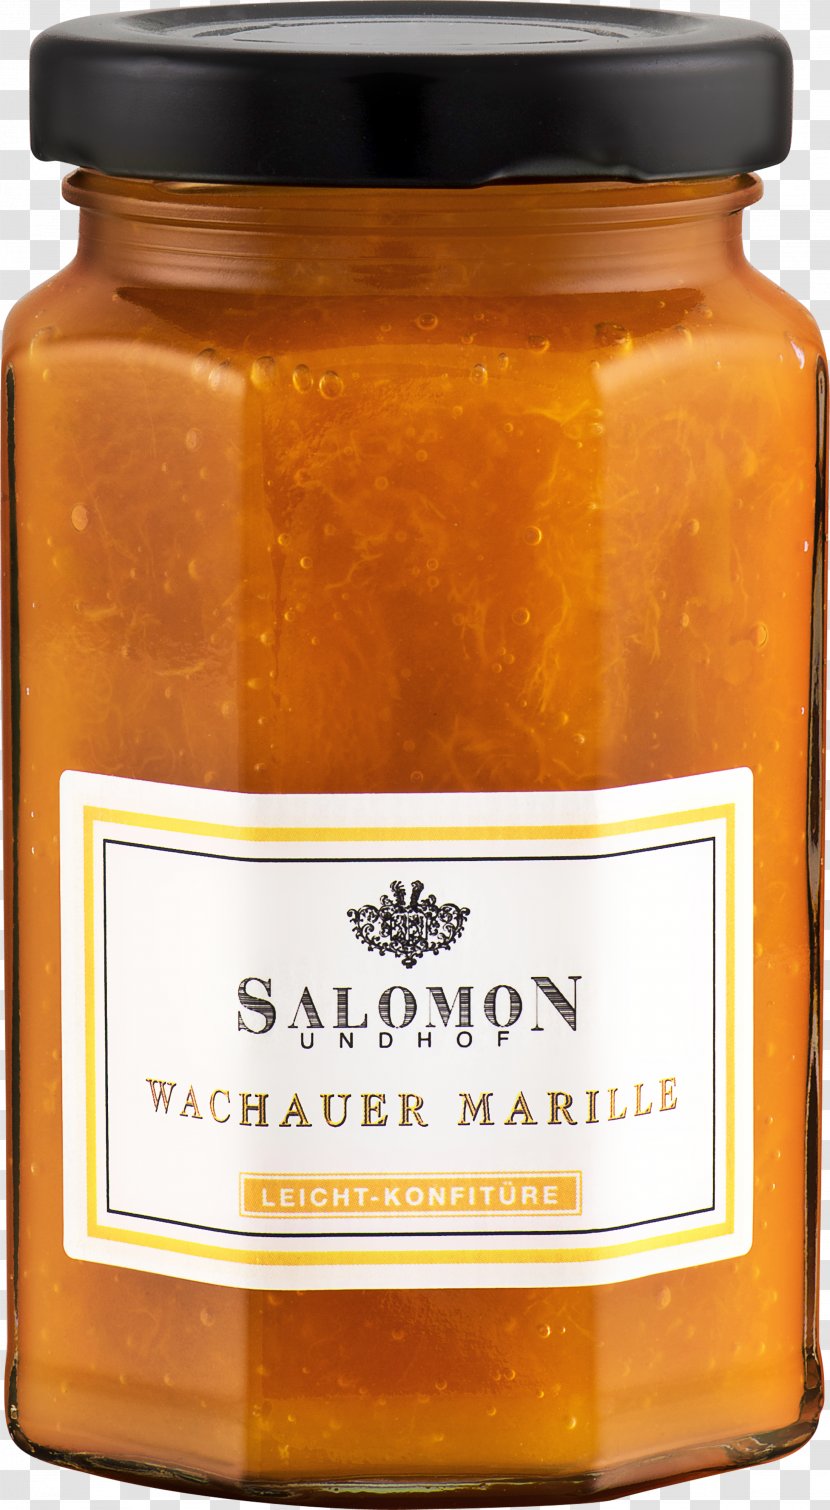 Chutney Marmalade Jam Dulce De Leche Wachauer Marille - Marmelade Transparent PNG